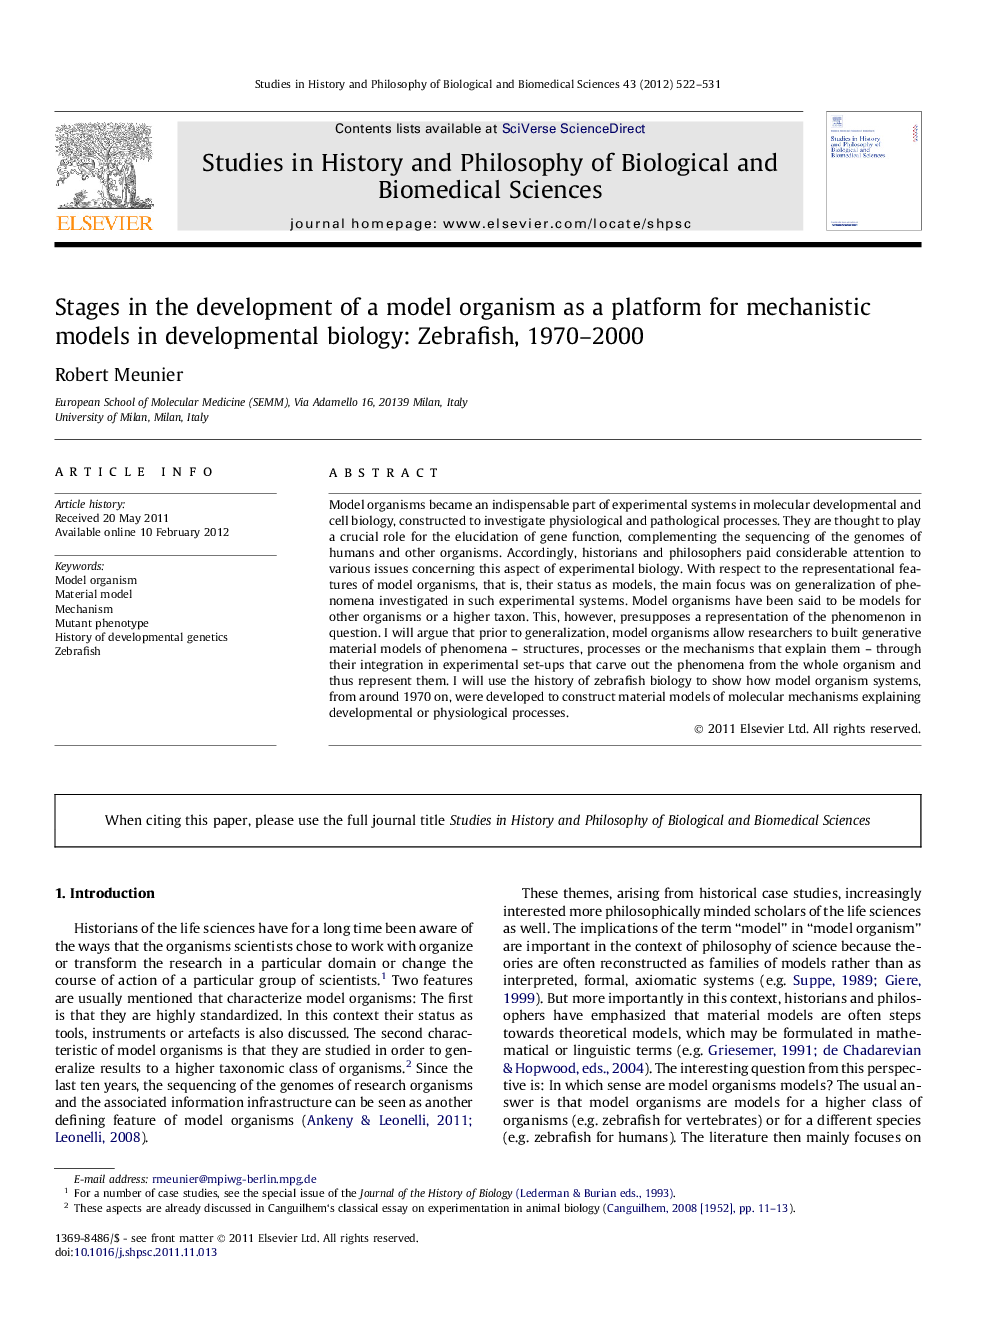 Stages in the development of a model organism as a platform for mechanistic models in developmental biology: Zebrafish, 1970–2000